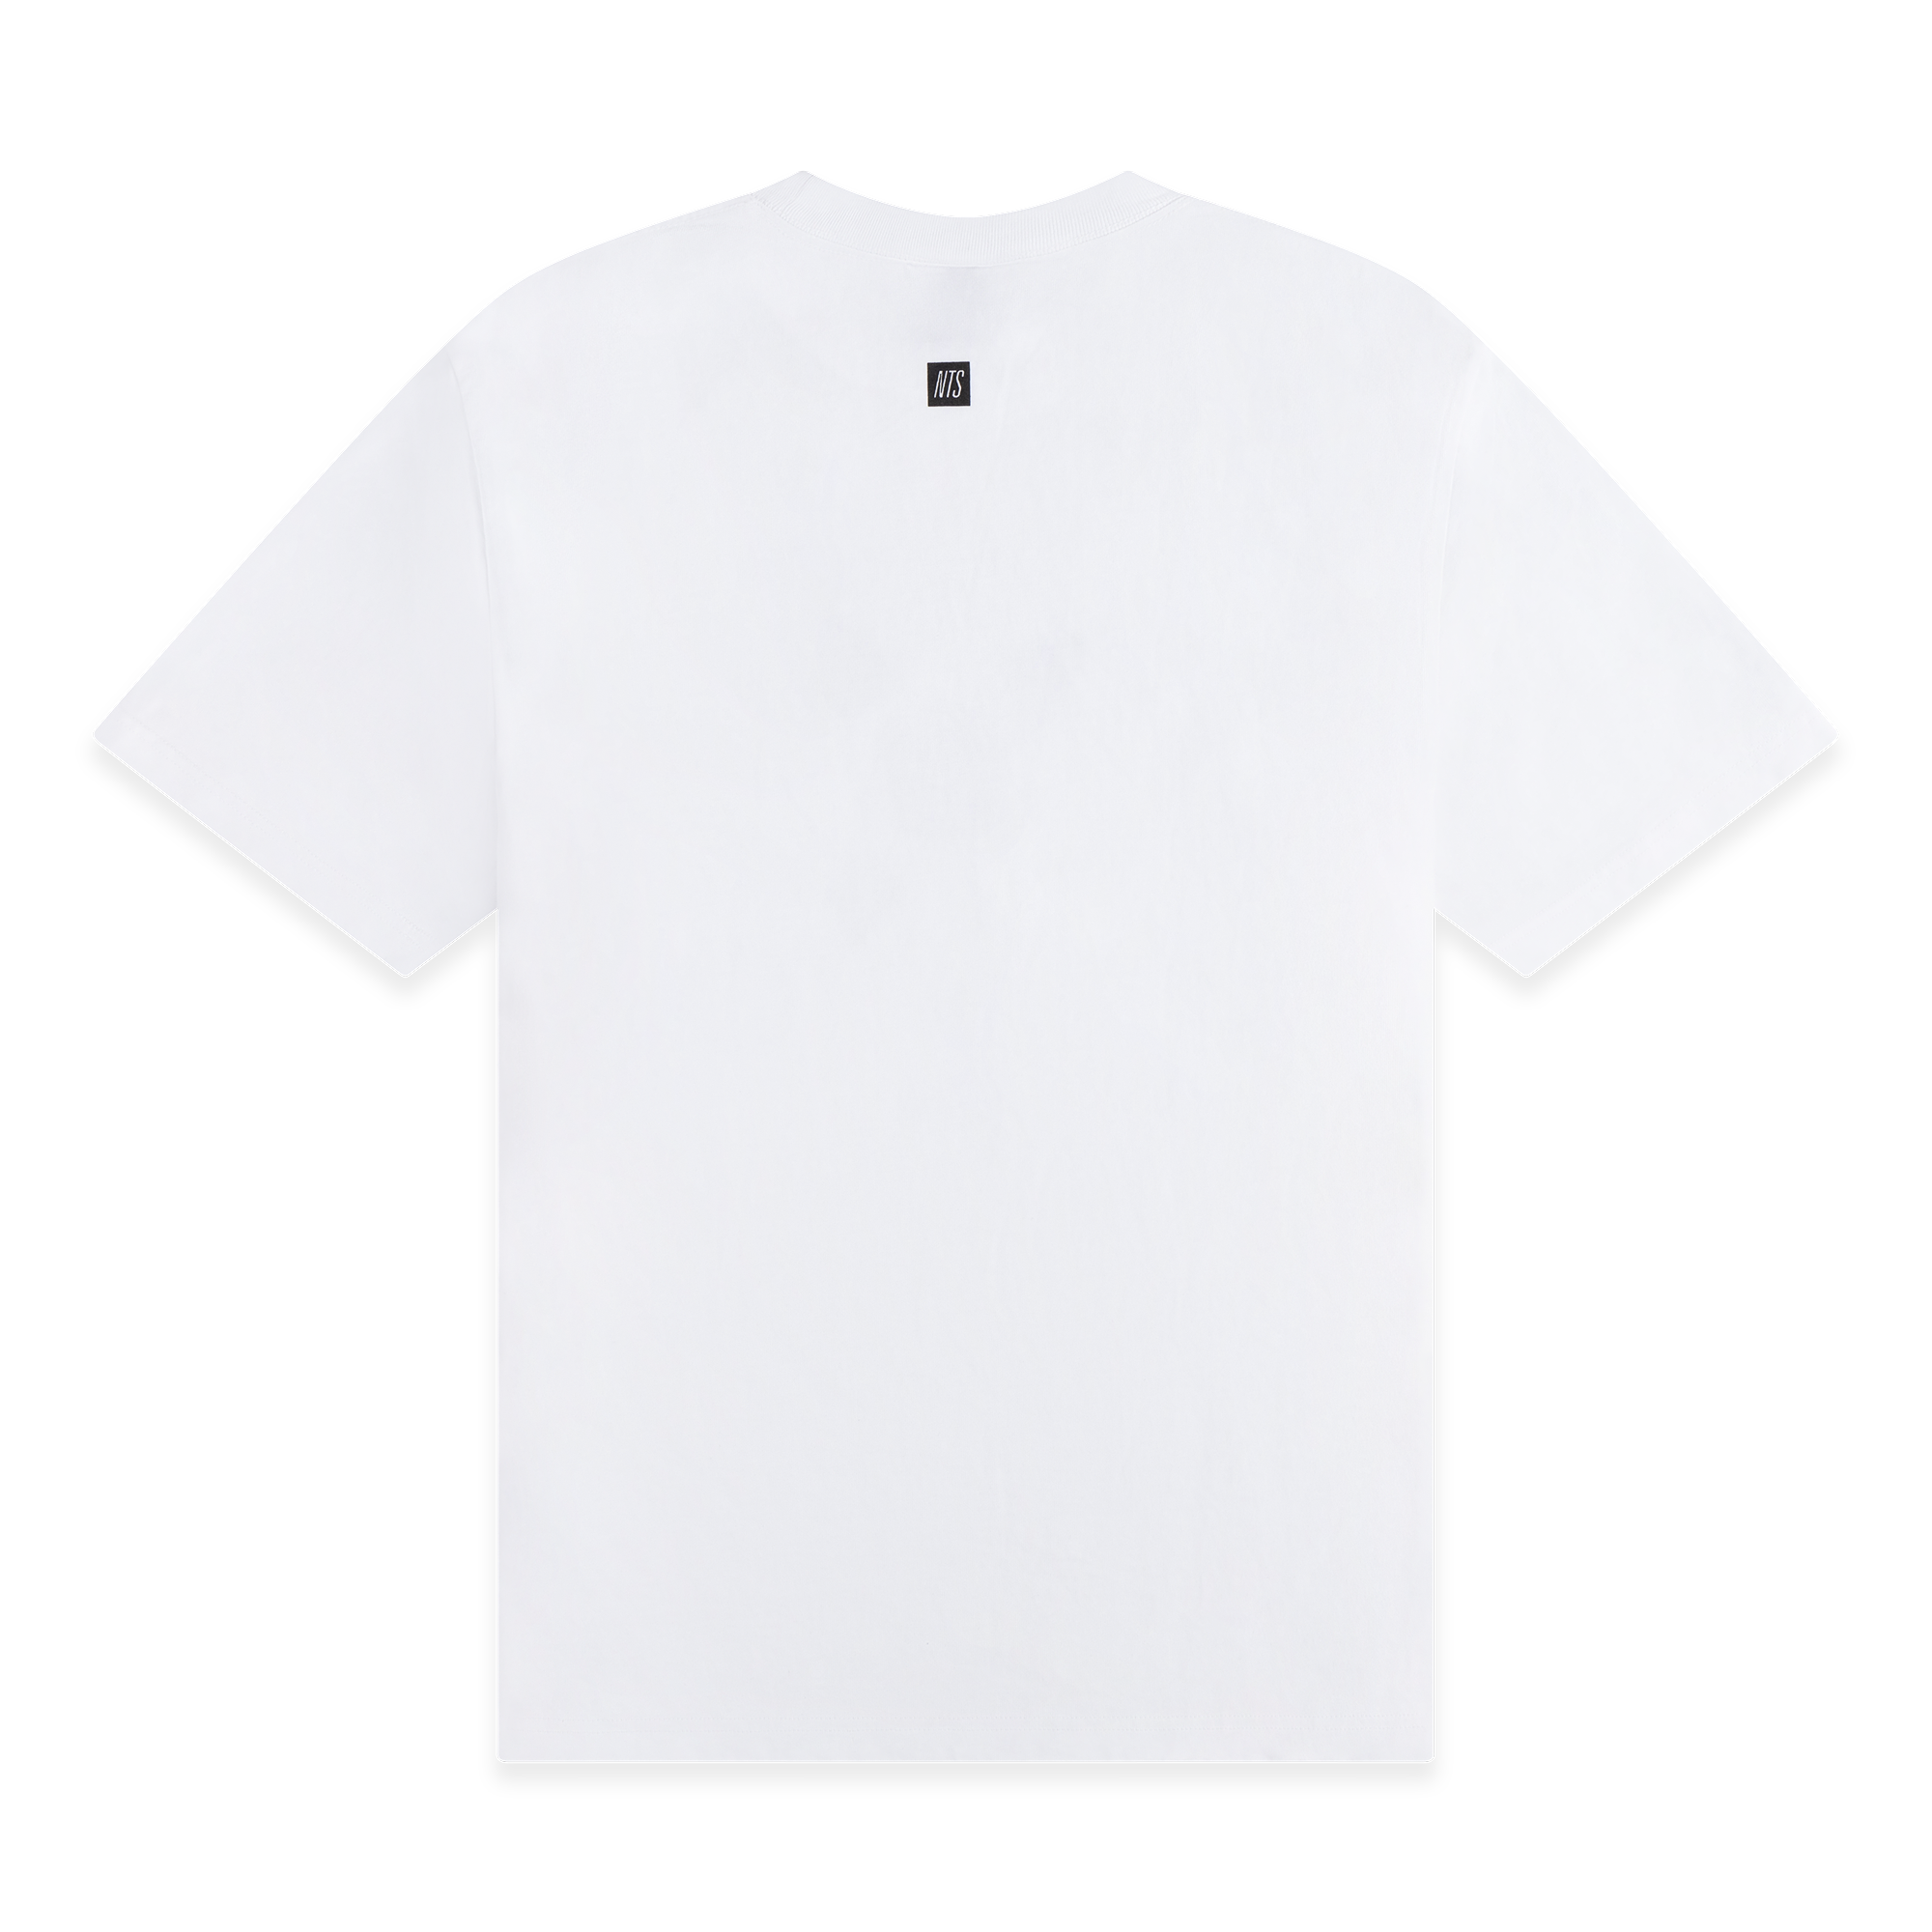 NTS RADIO - Nymph T-shirt - White